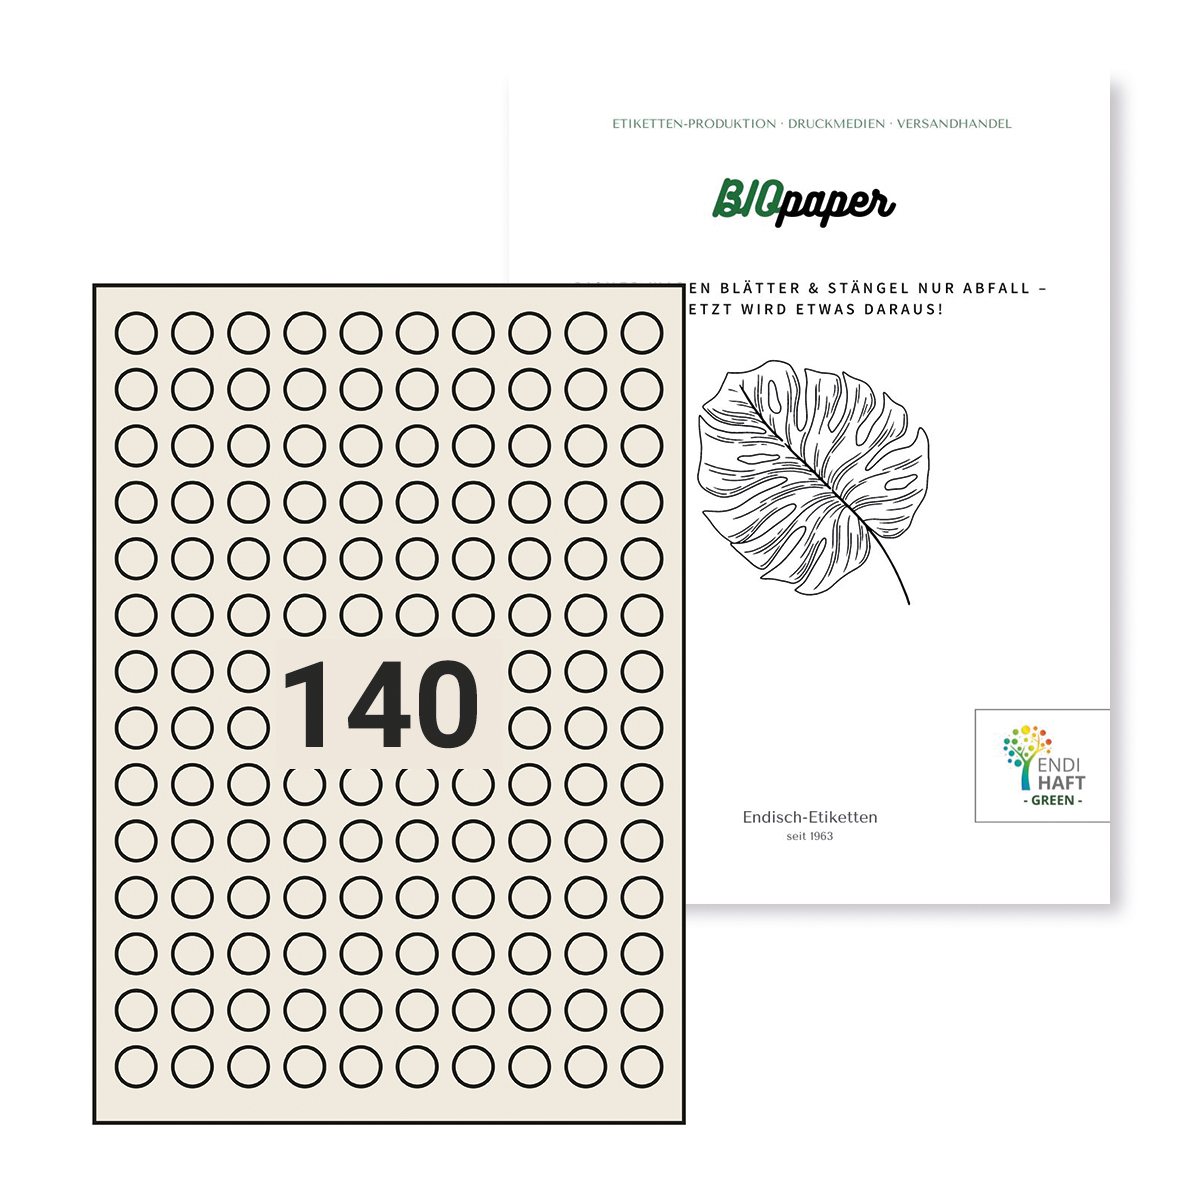 ENDI-HAFT BIOpaper Natural, 14 mm rund, 1400 Etiketten, 10 Blatt DIN A4 / Pack